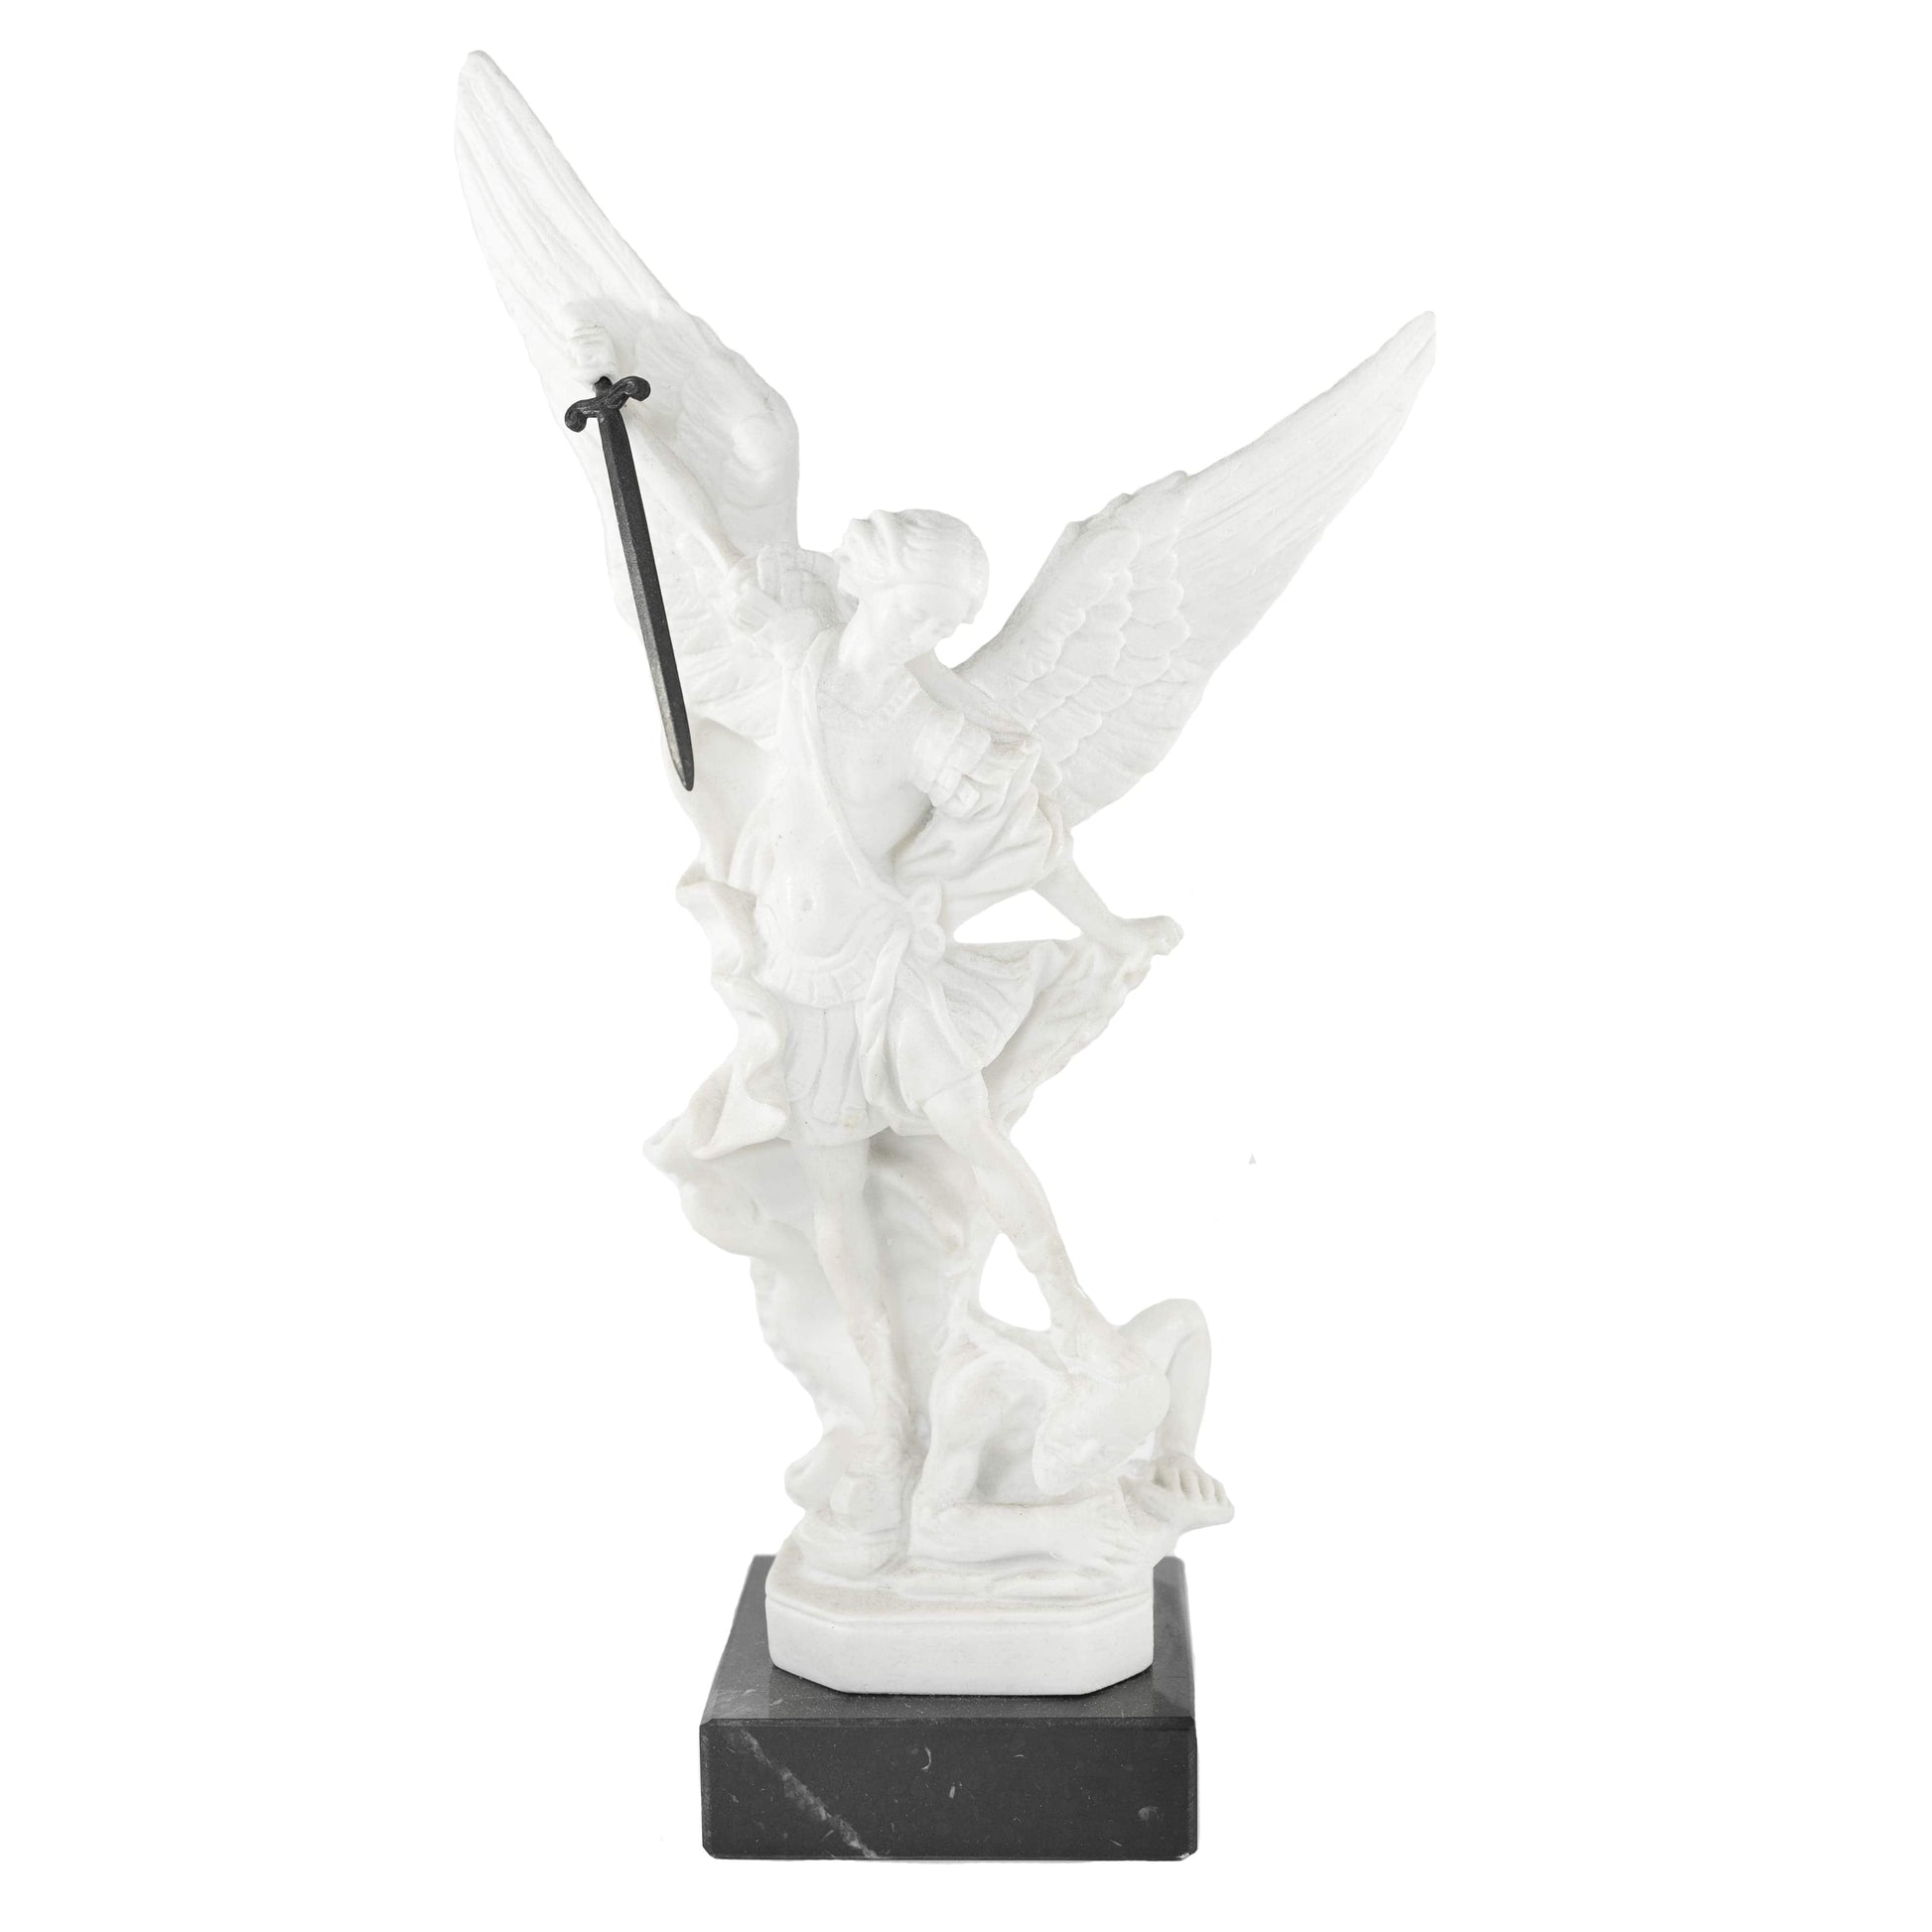 MONDO CATTOLICO 22 cm Saint Michael The Archangel Marble Dust Statue